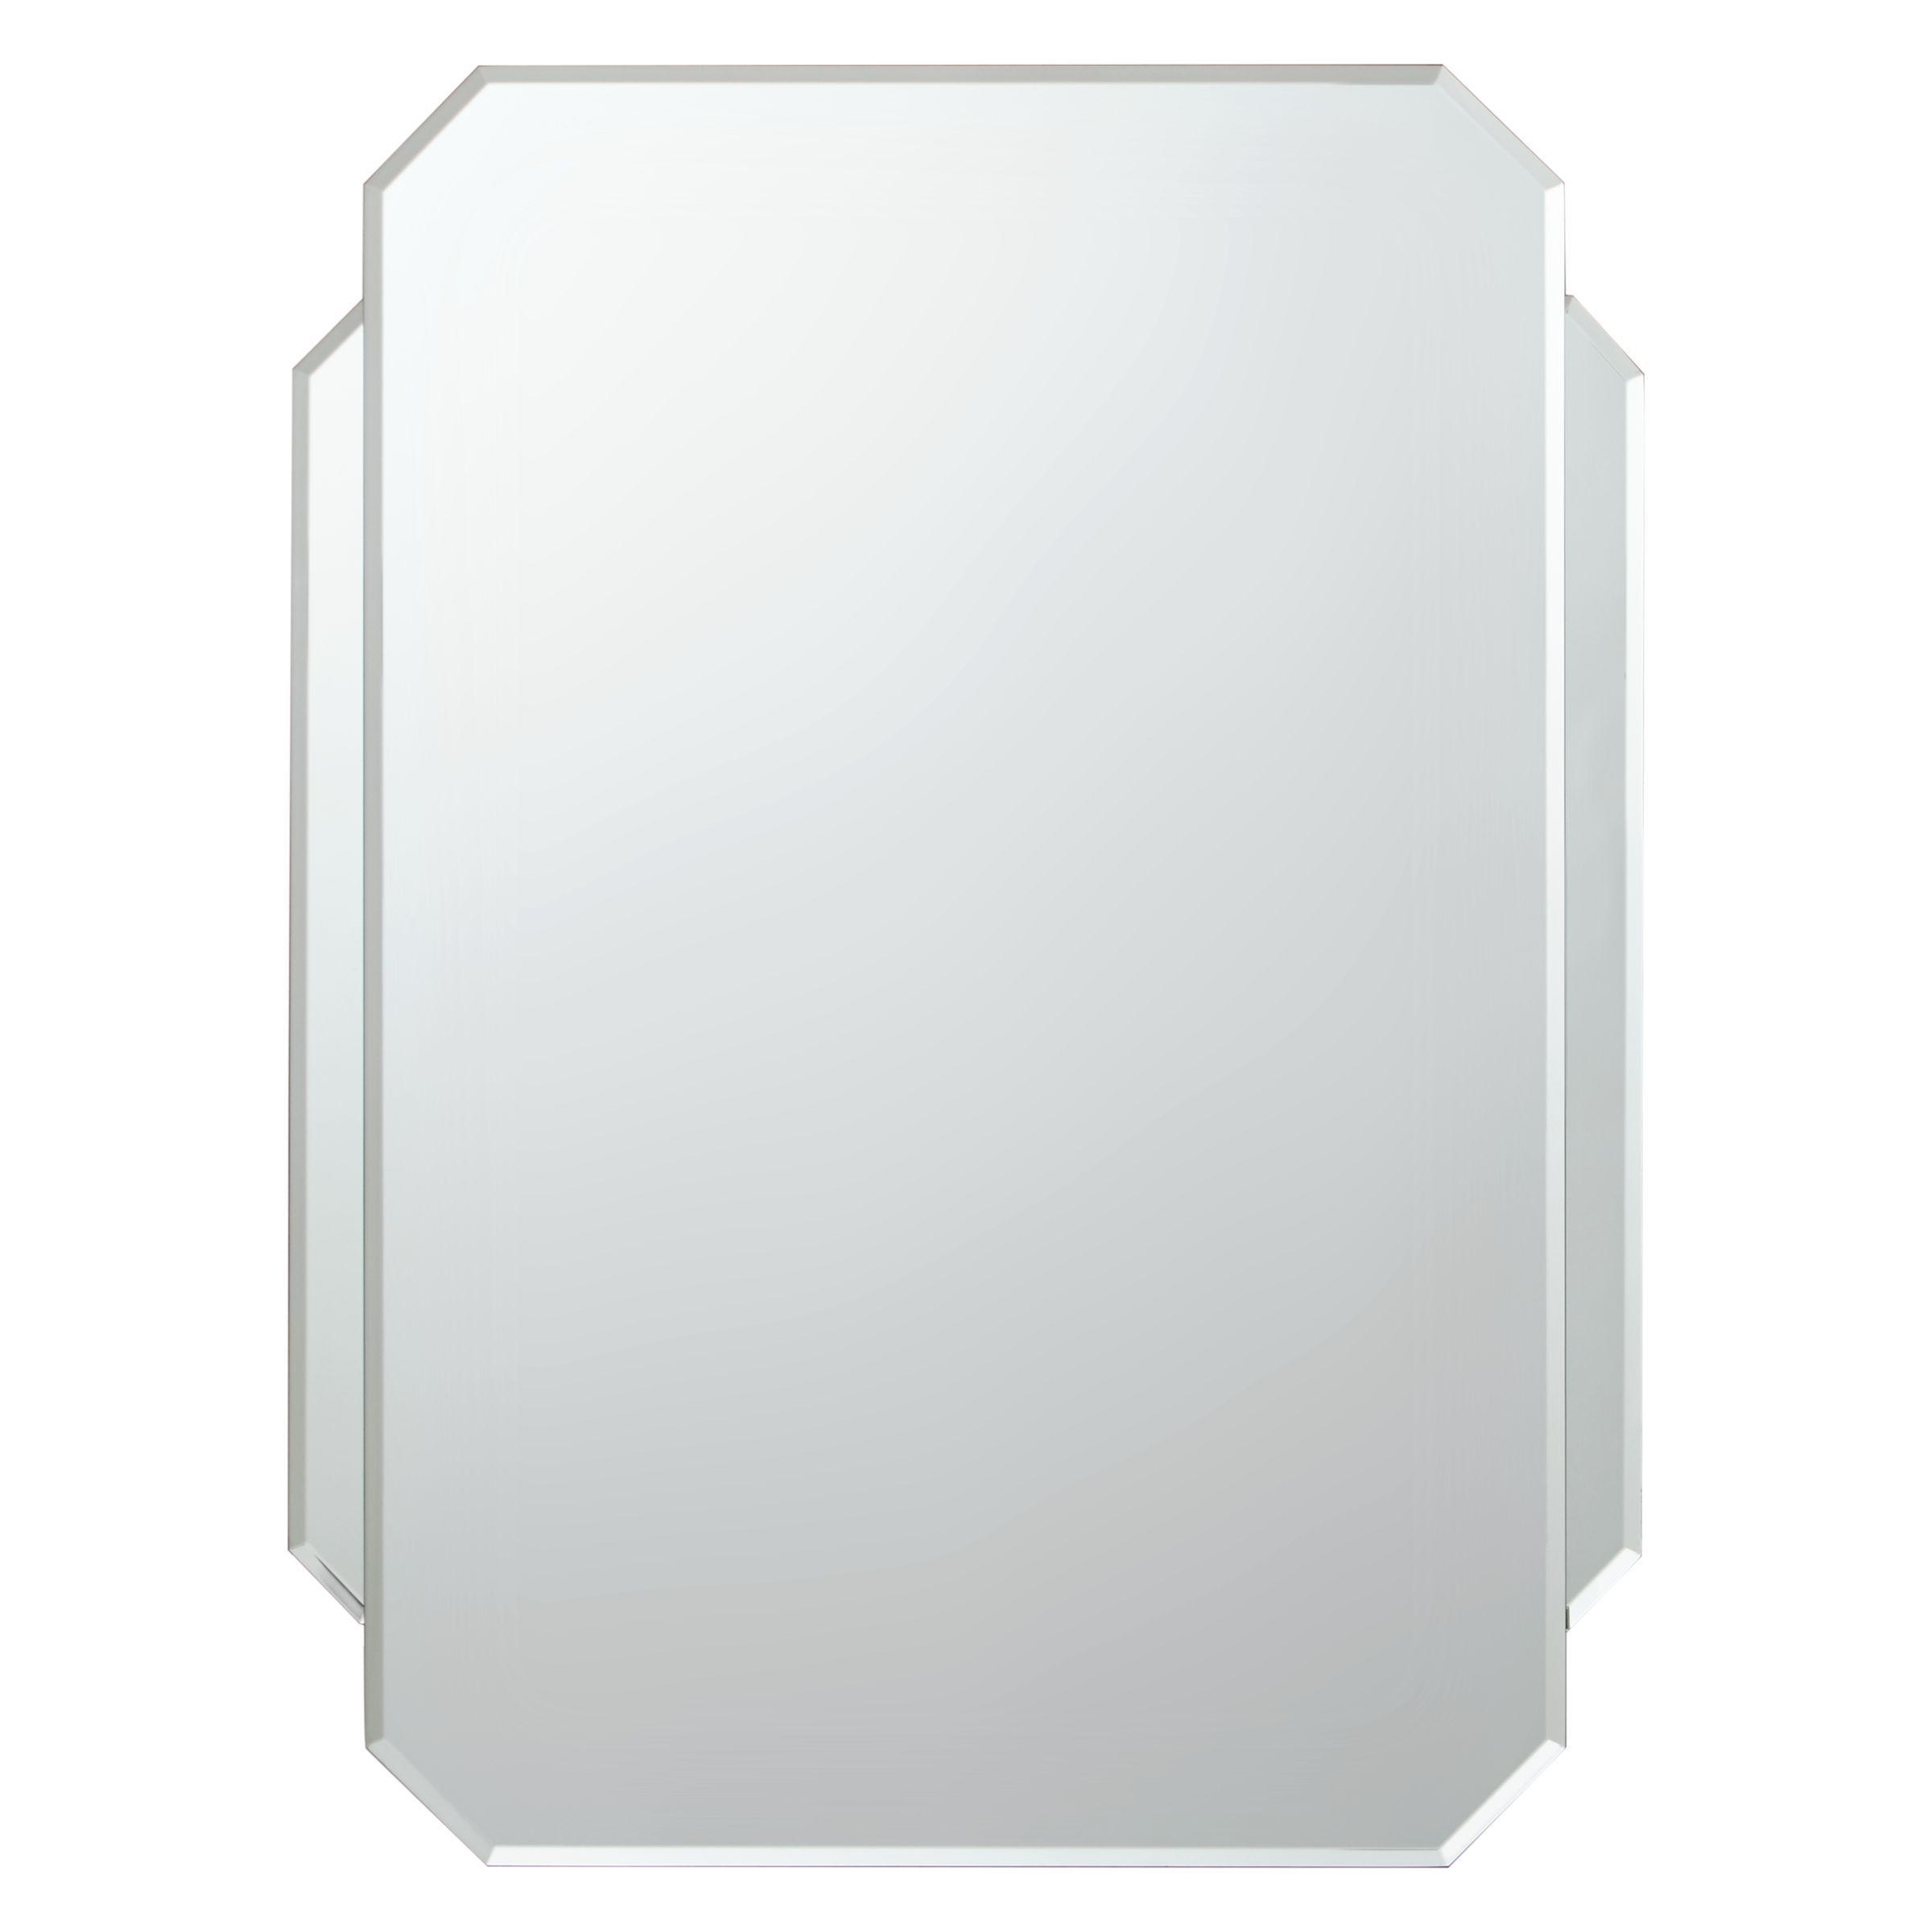 آینه دیواری ایکیا (m34987)|ایده ها